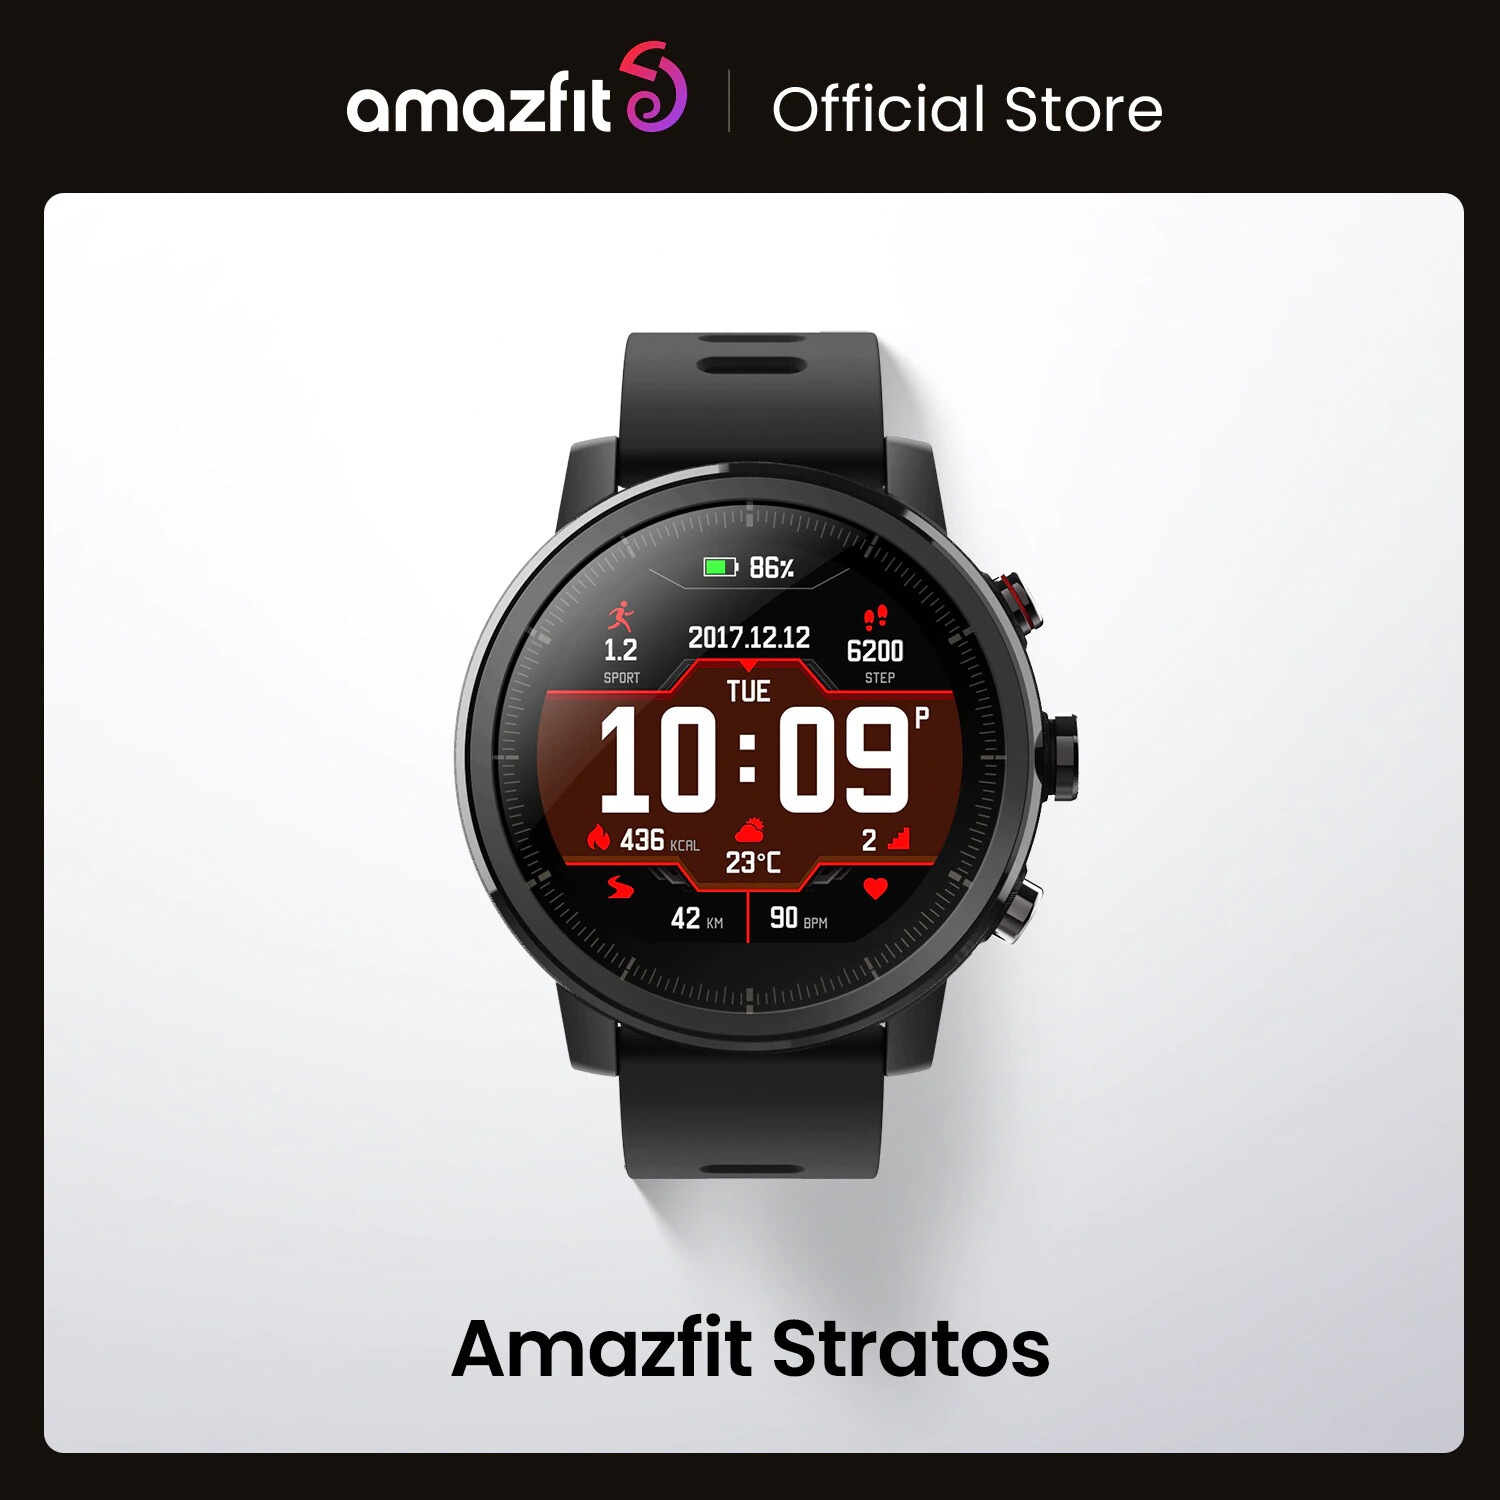 Smartwatch 2